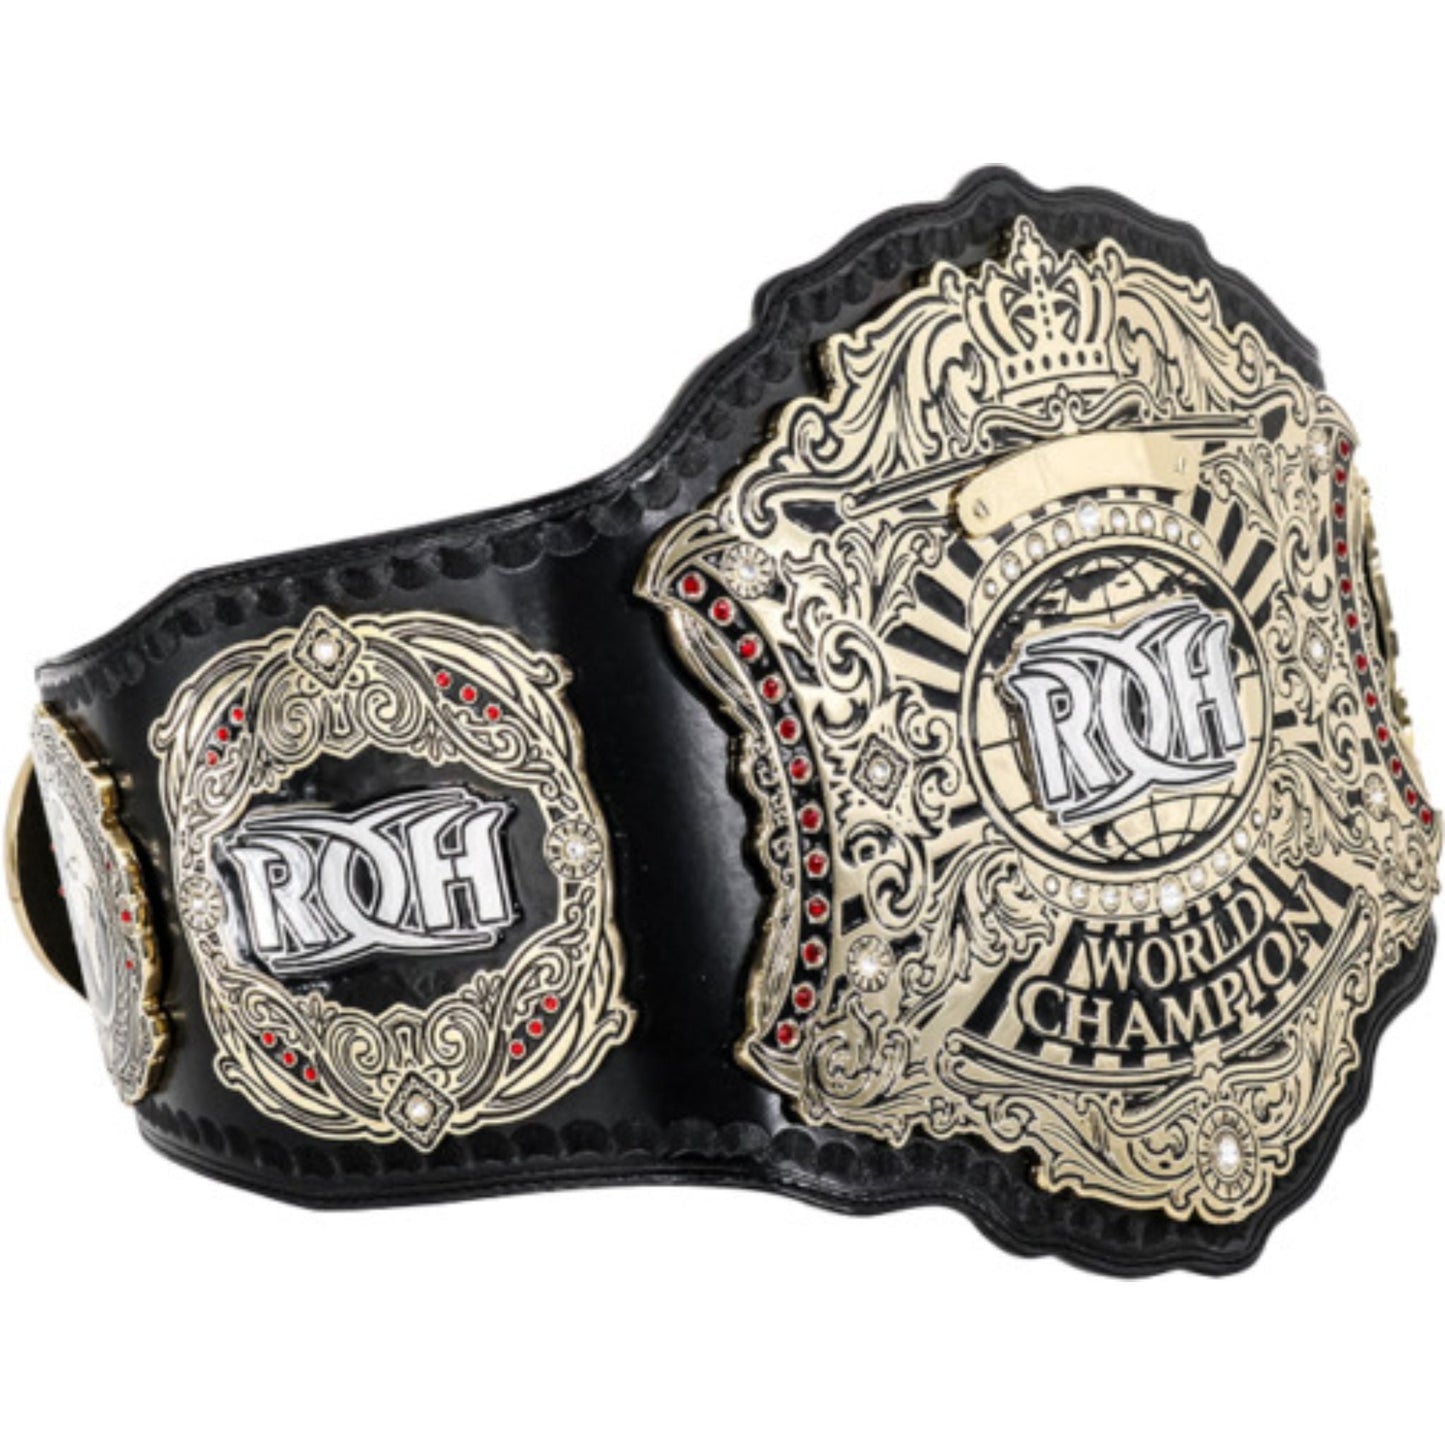 ROH World Wrestling Heavyweight Championship Replica Belt